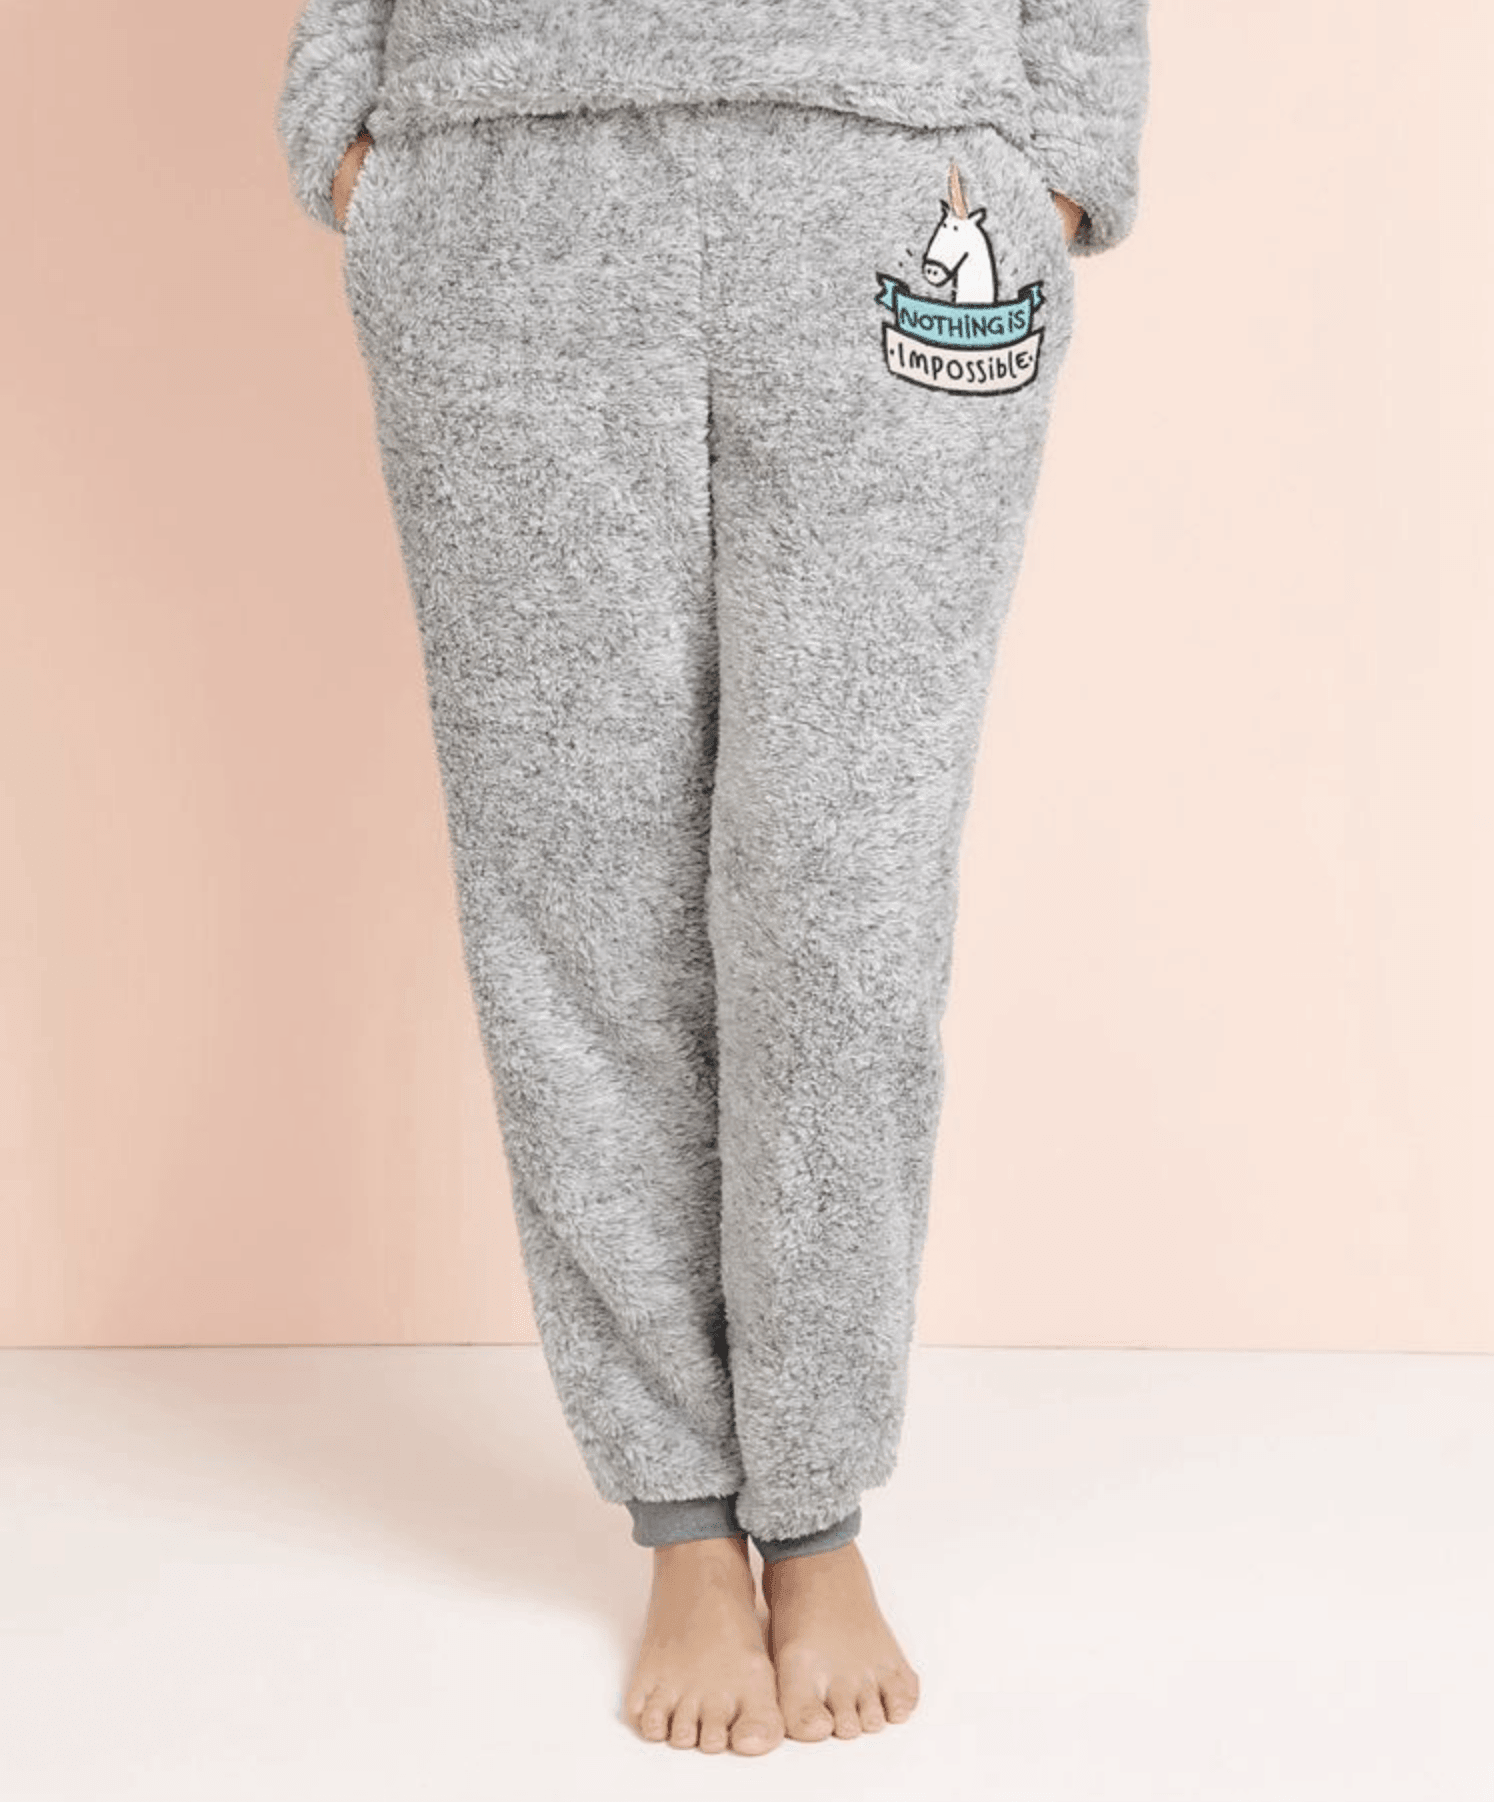 Unicorn Fleece Pajamas - Unicorn